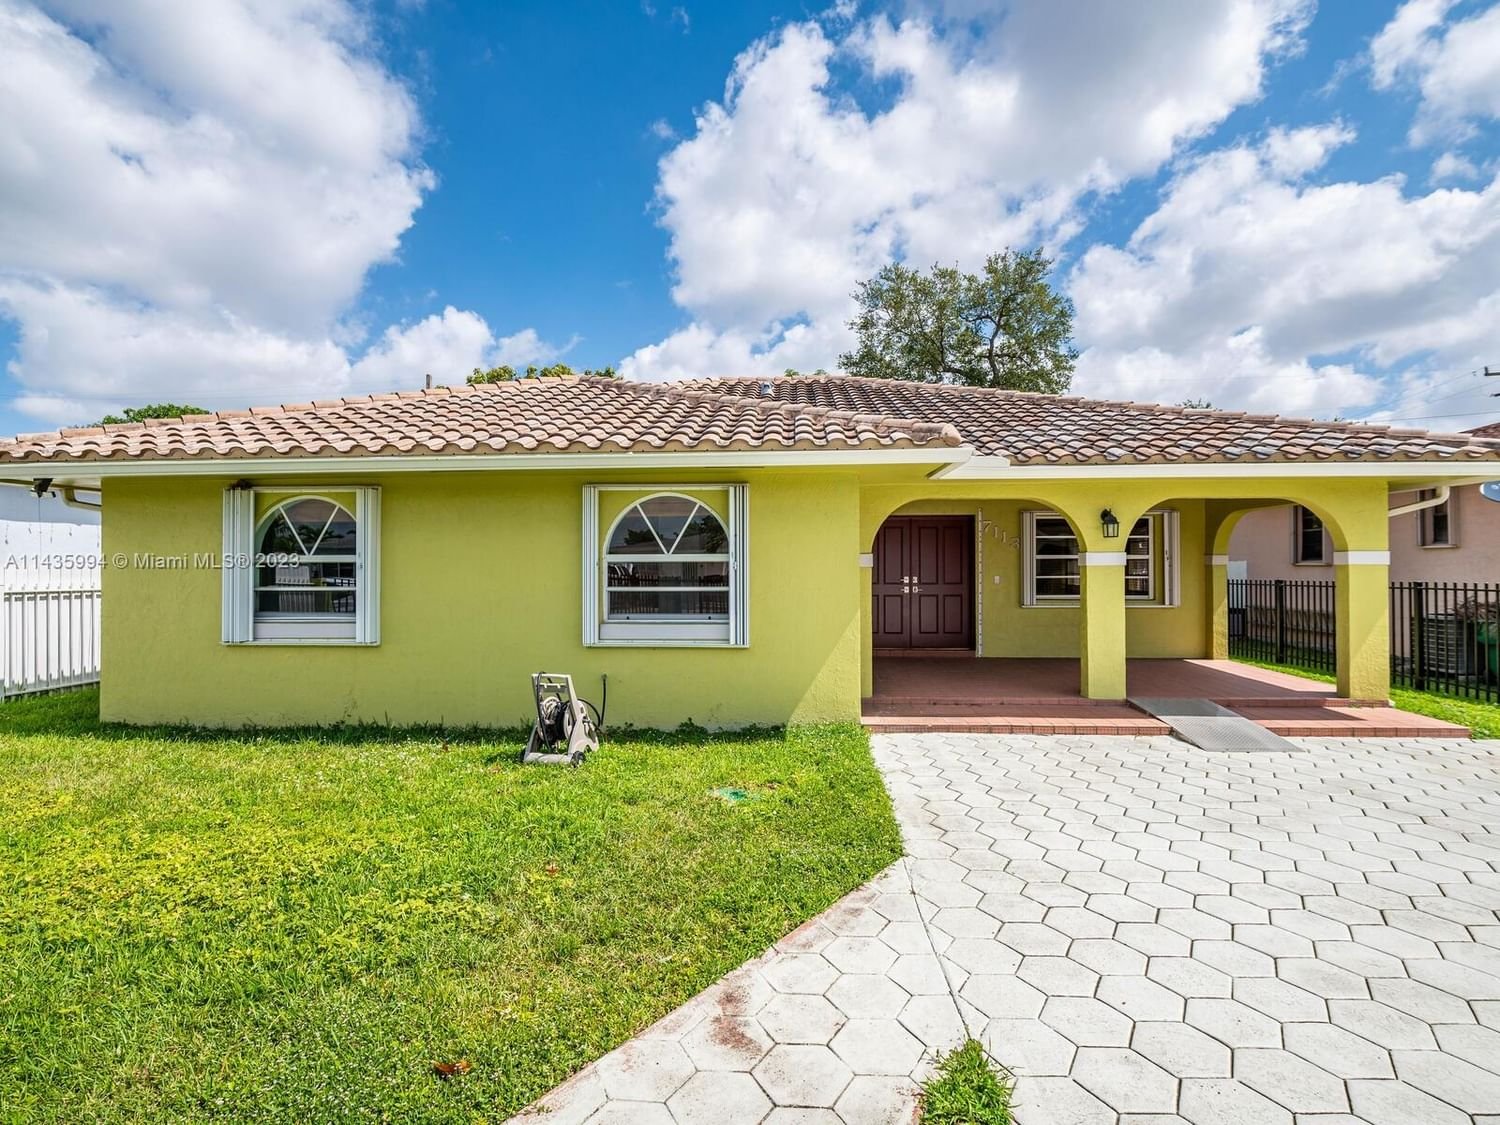 Real estate property located at 7113 13th St, Miami-Dade County, Miami, FL